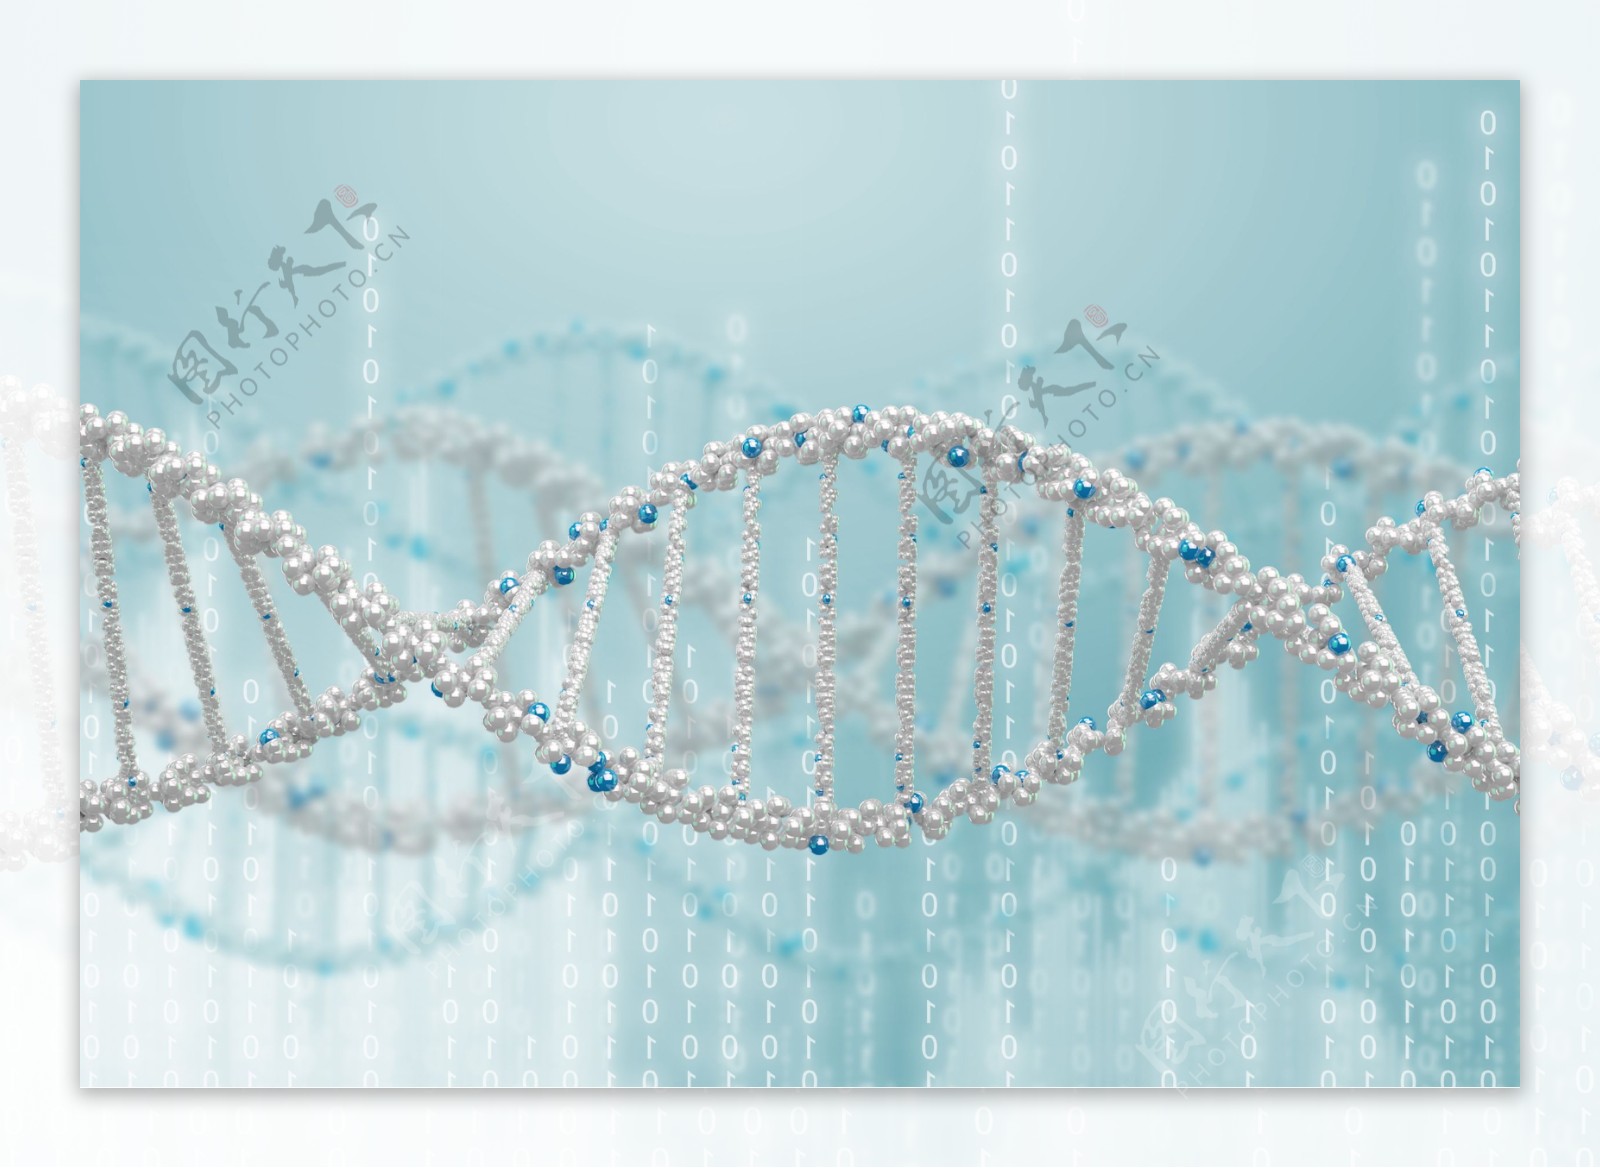 DNA分子结构图片